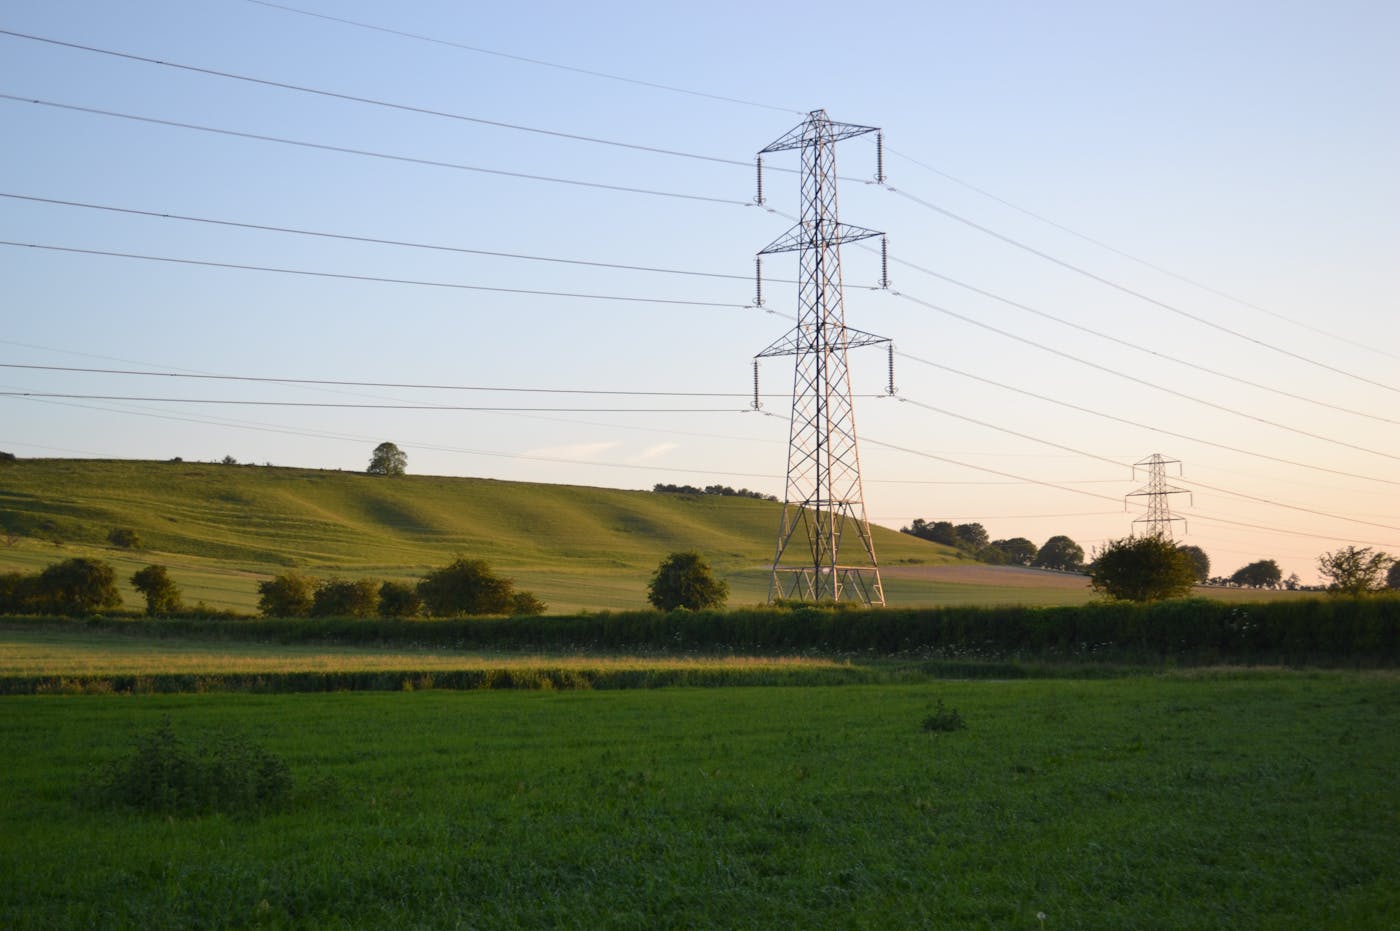 Pylon in rural landscape